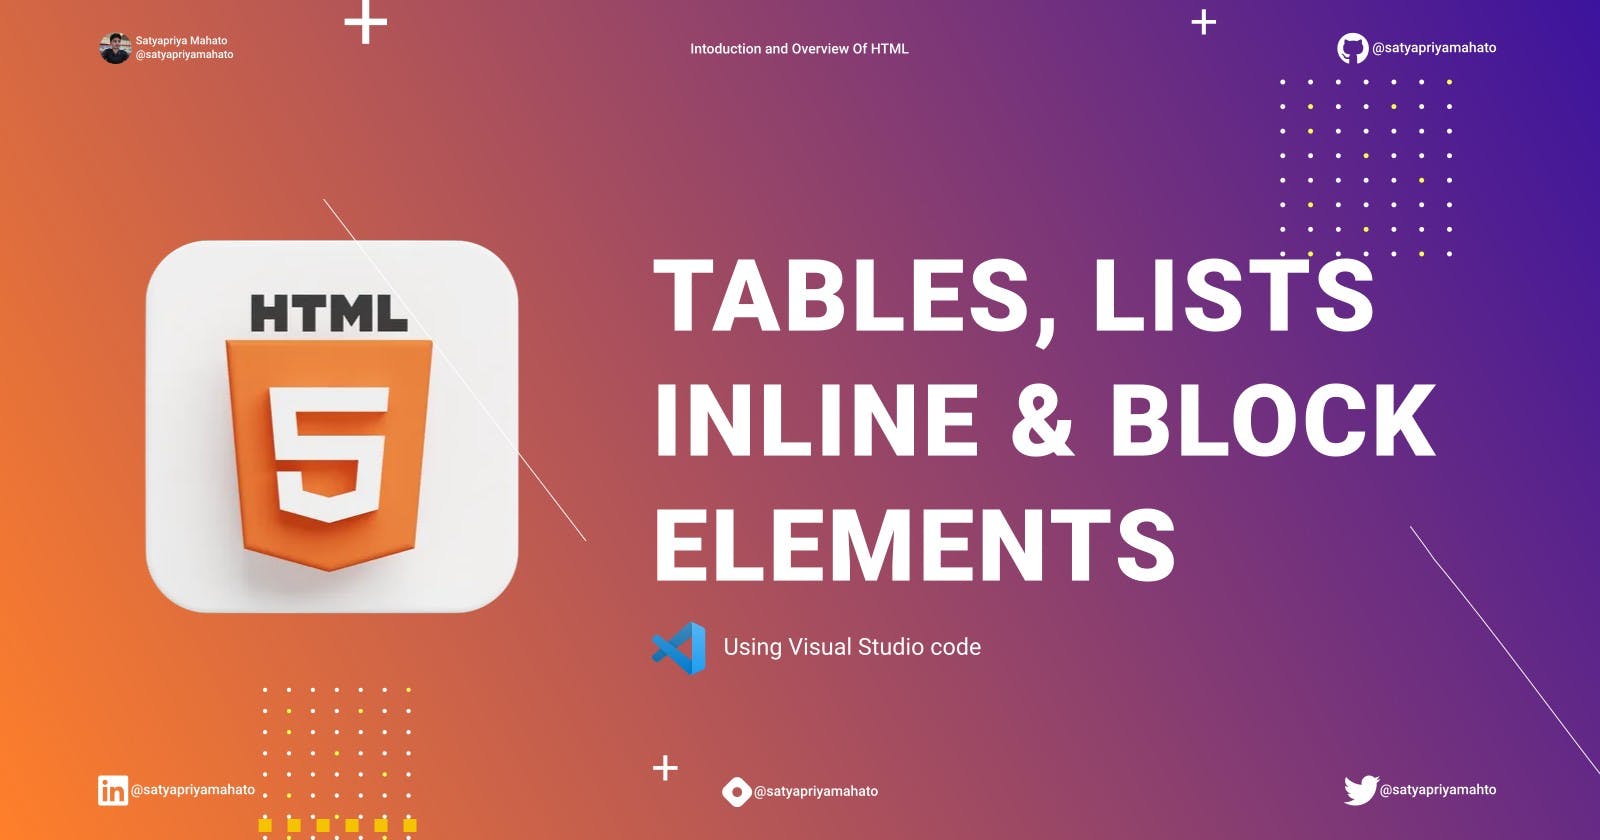 Tables, Lists, Inline elements, Block elements